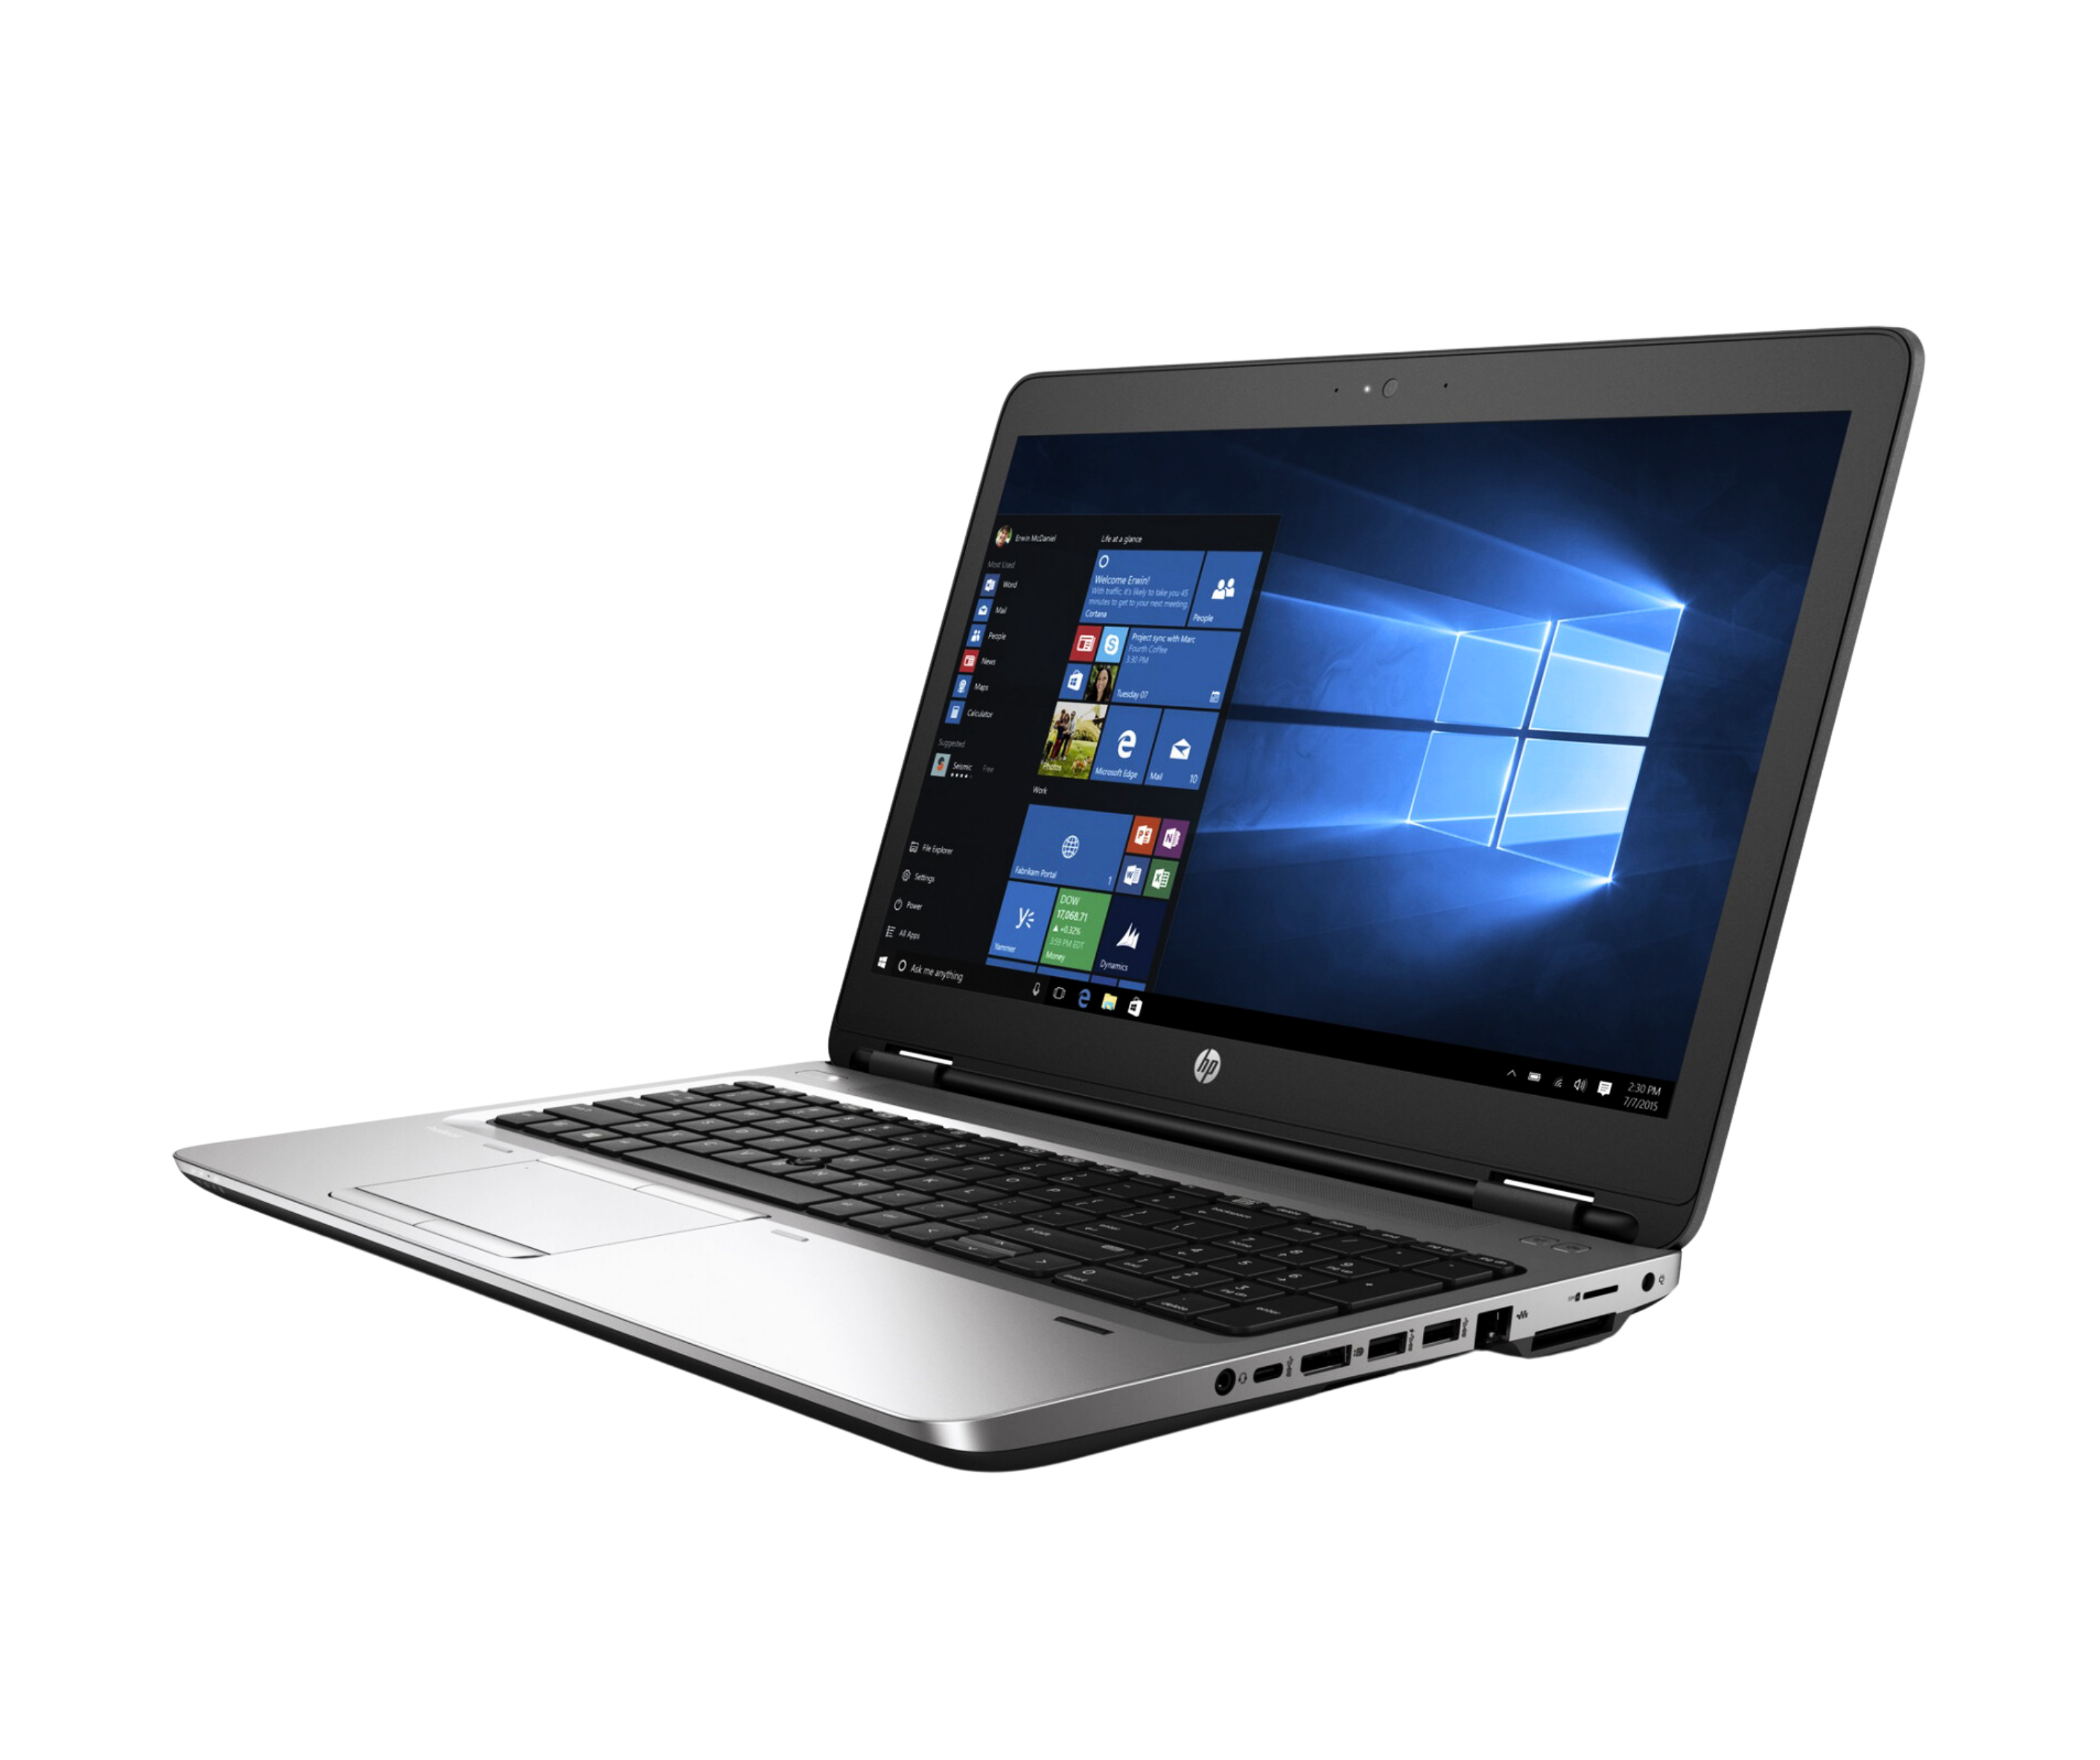 HP ProBook 650 G2 / Pantalla 15.6 pulgadas PC Intel Core i7 , 8 GB DDR4, 240GB SSD (Reacondicionado)